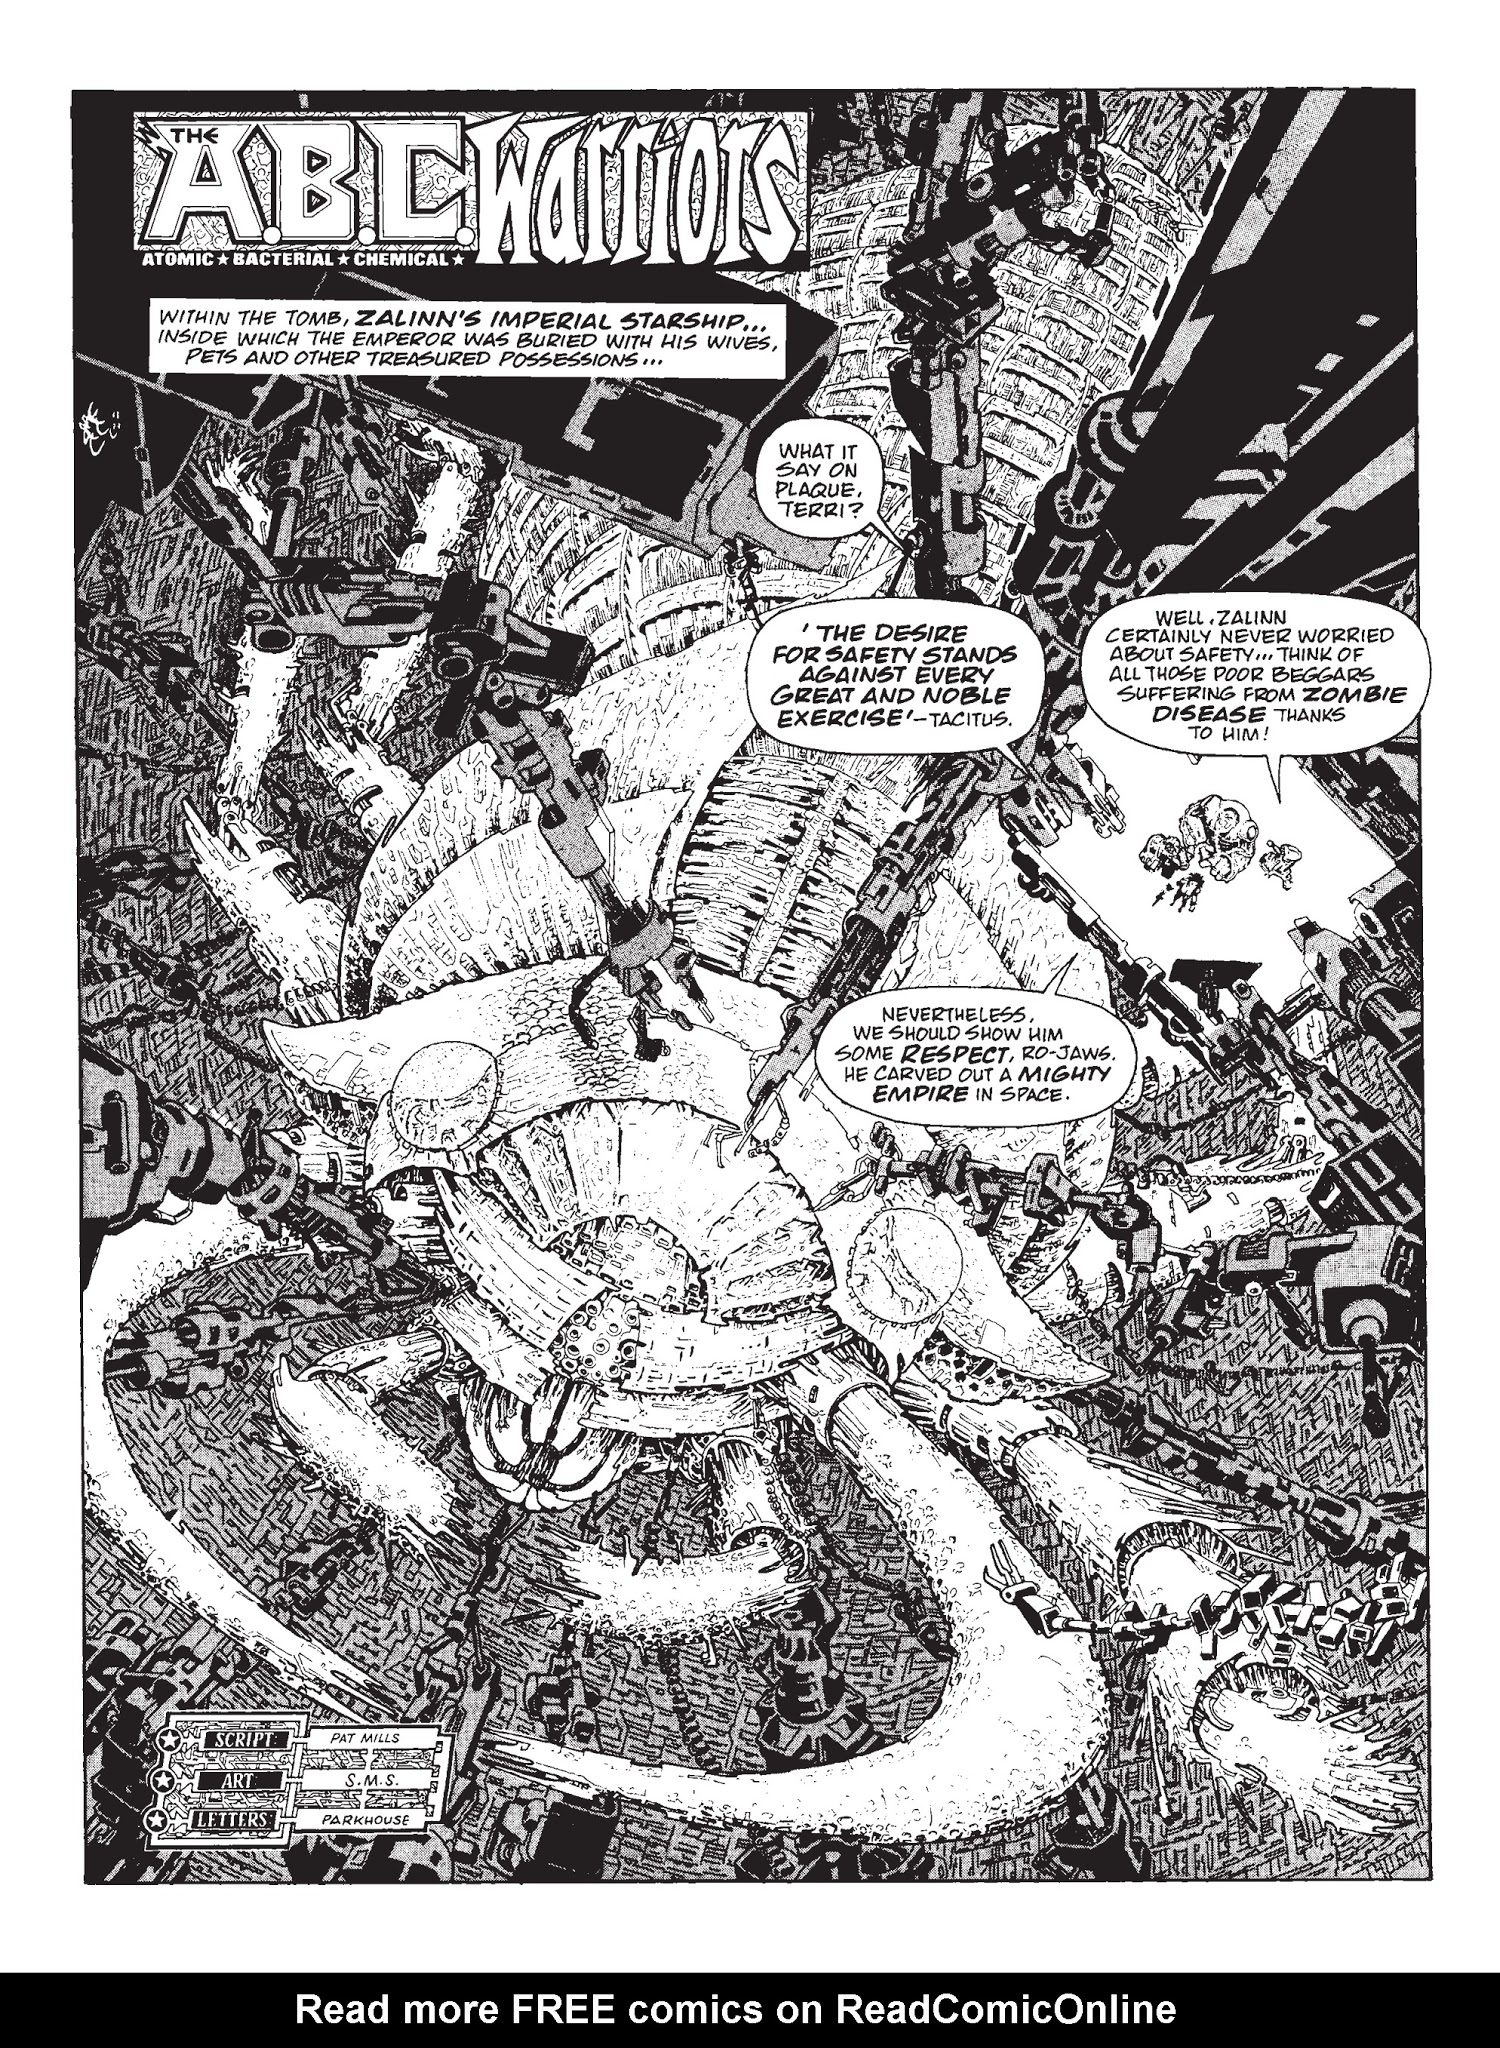 Read online ABC Warriors: The Mek Files comic -  Issue # TPB 1 - 224